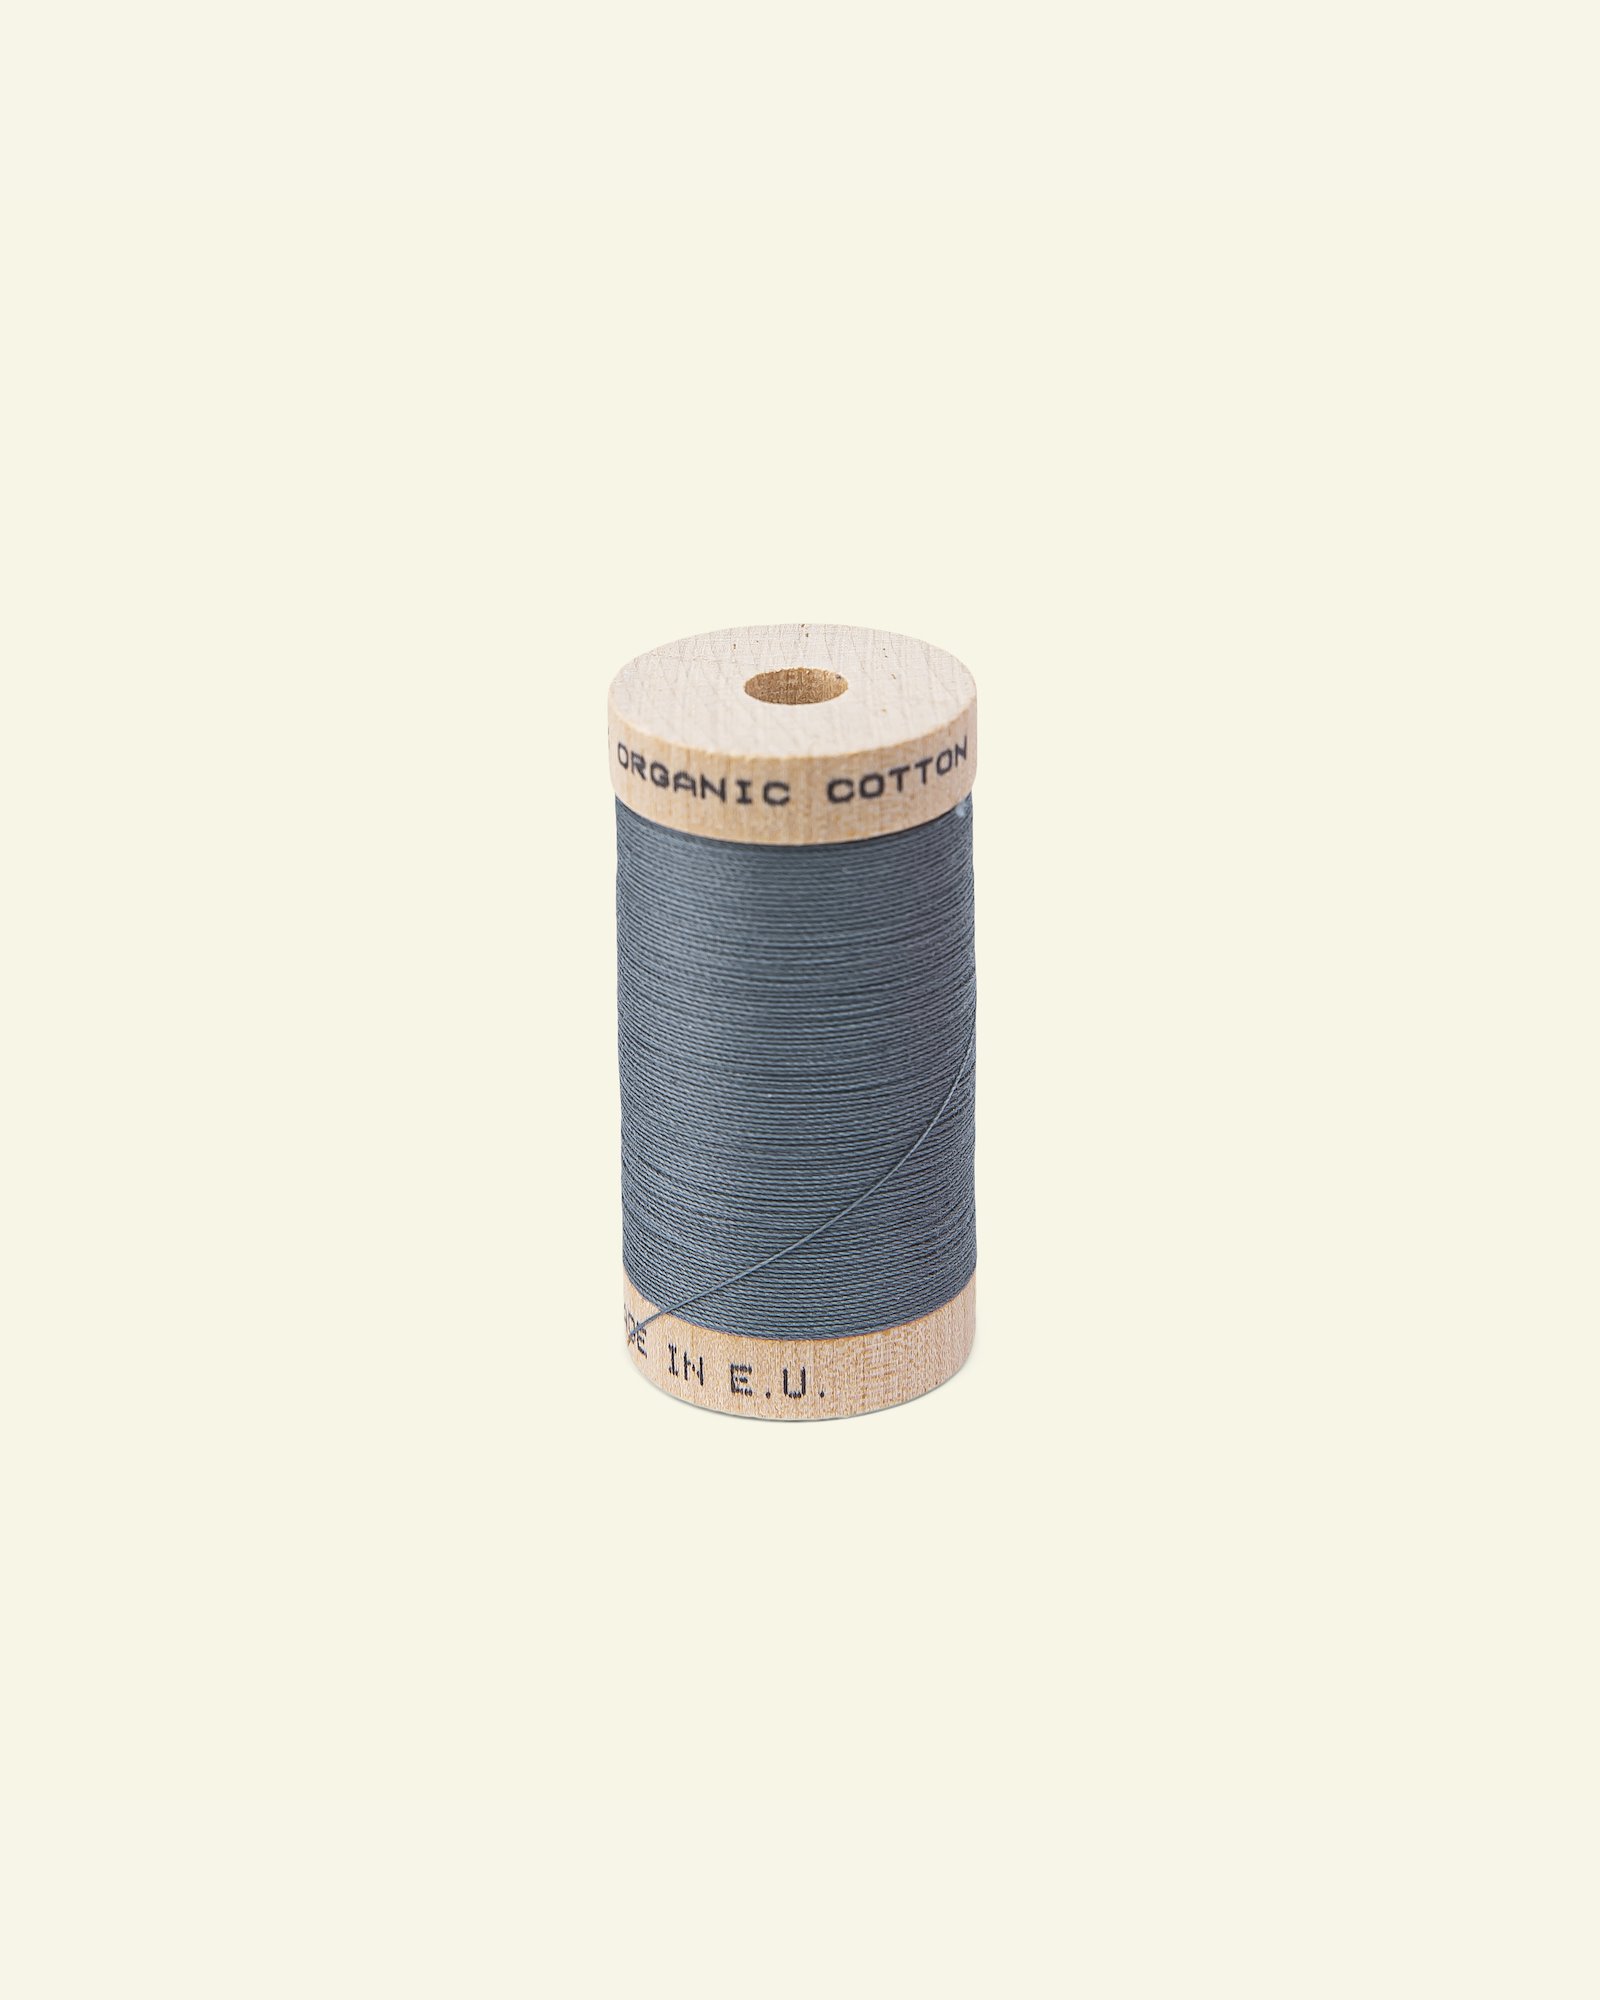 Sewing thread organic cotton blue 100m 18021_pack